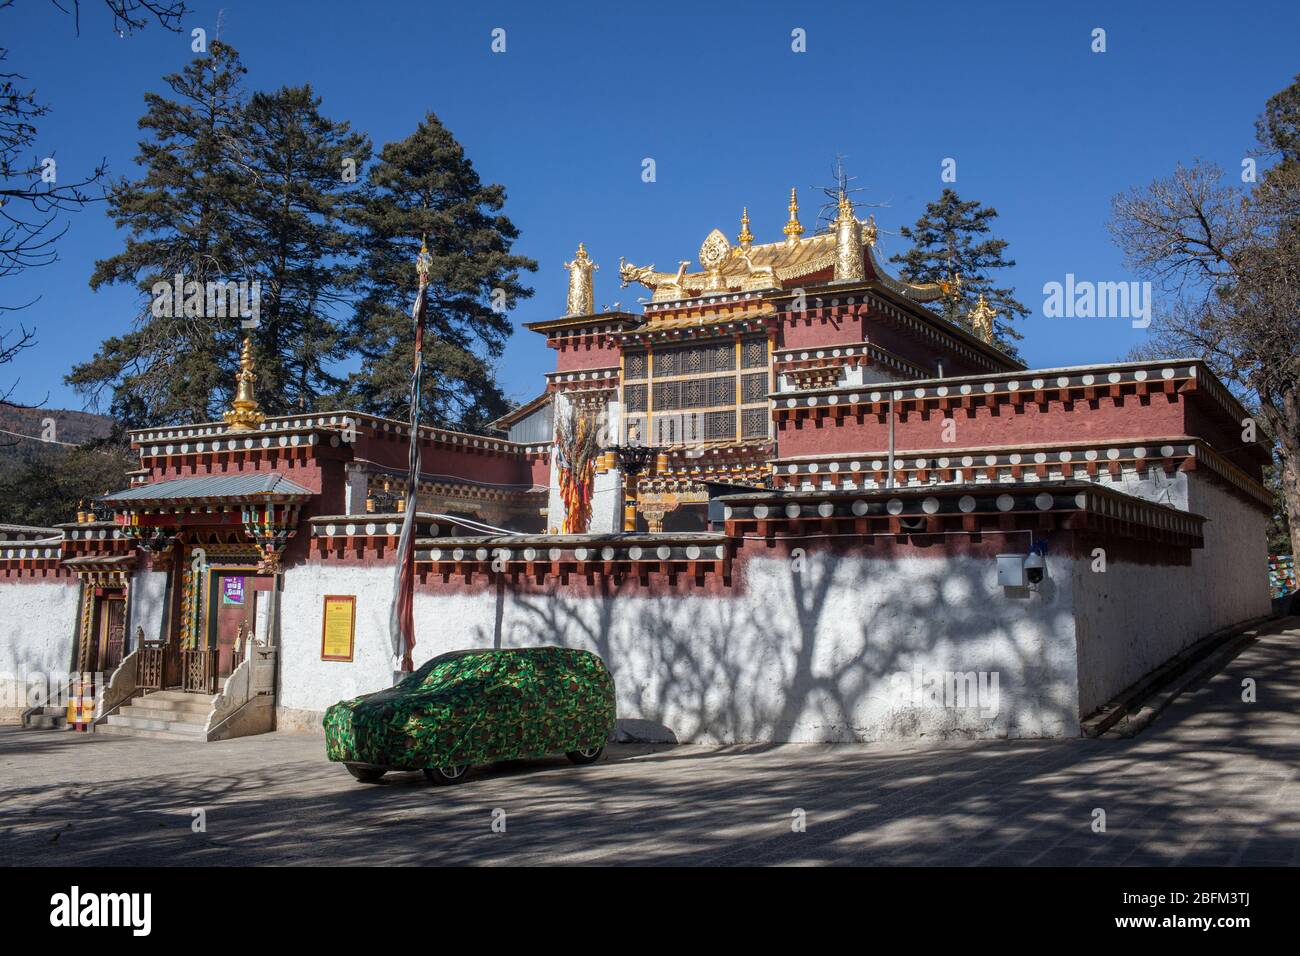 Tempio buddista di Ringo, Shangri la, Cina 2019 Foto Stock